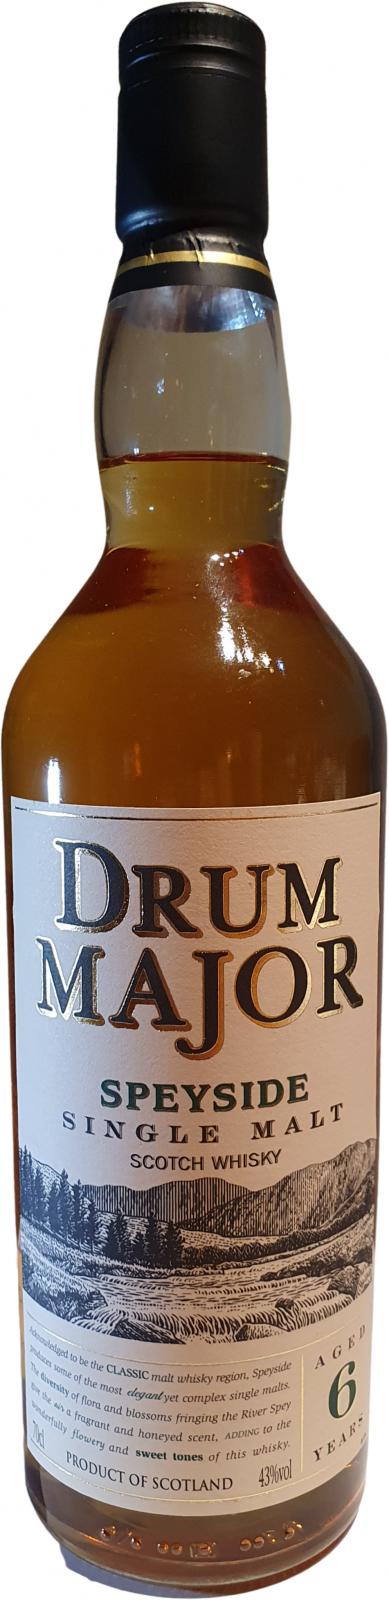 Drum Major 06-year-old